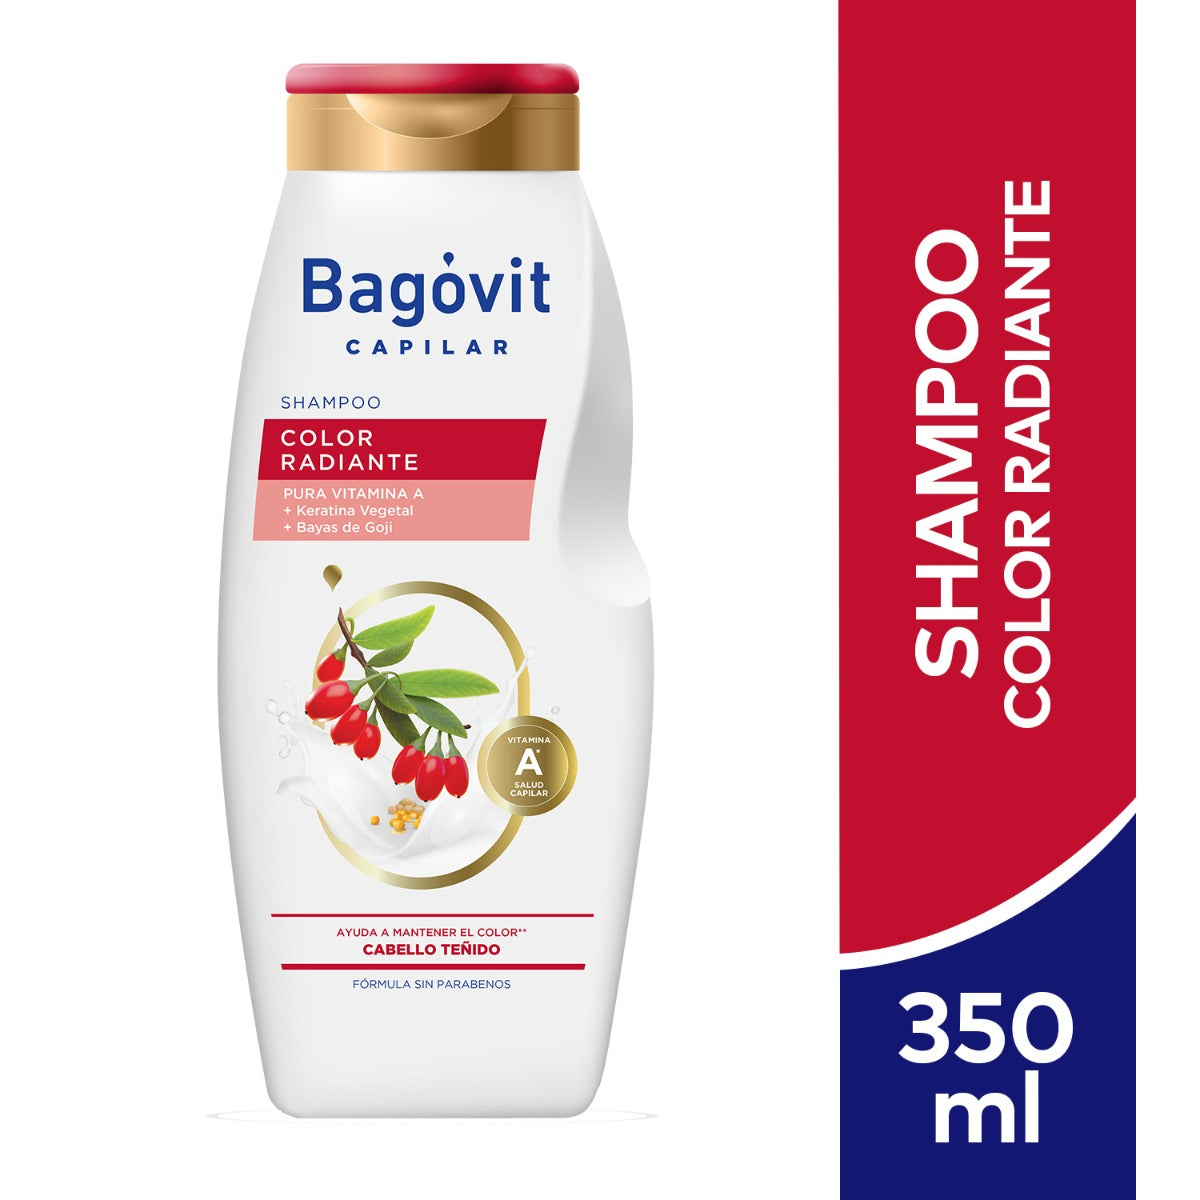 Bagovit Facial Pro Bio Anti-Stain Cream - Natural, Non-Greasy Hydrating Cream with Brightening & Anti-Aging Properties